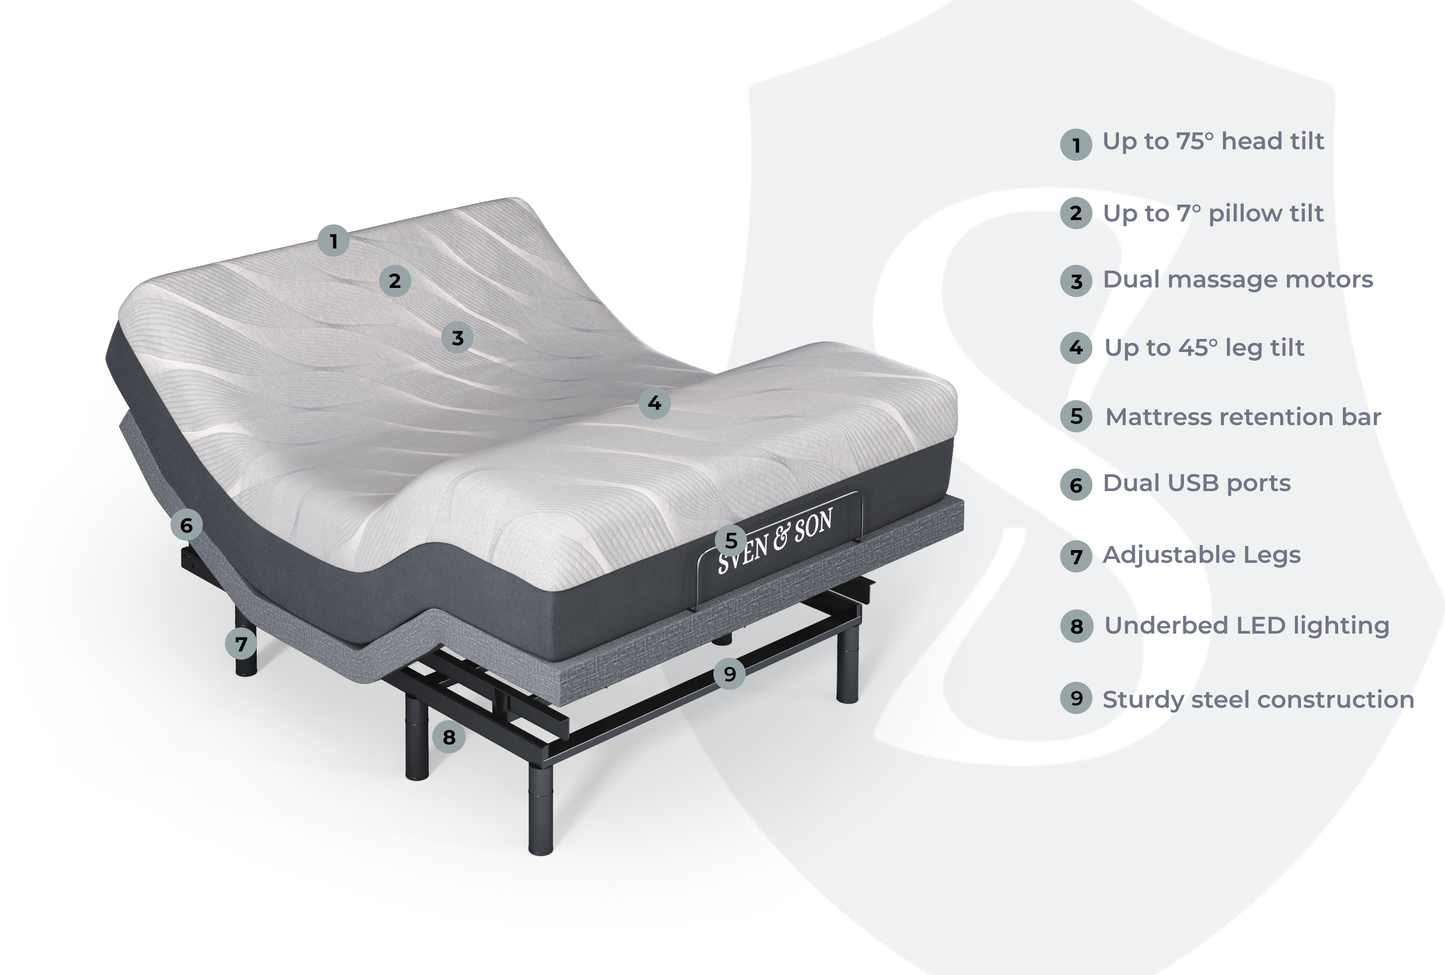 Classic+ Series Adjustable Bed Base + Choice of Mattress Bundle bundle SVEN & SON® 